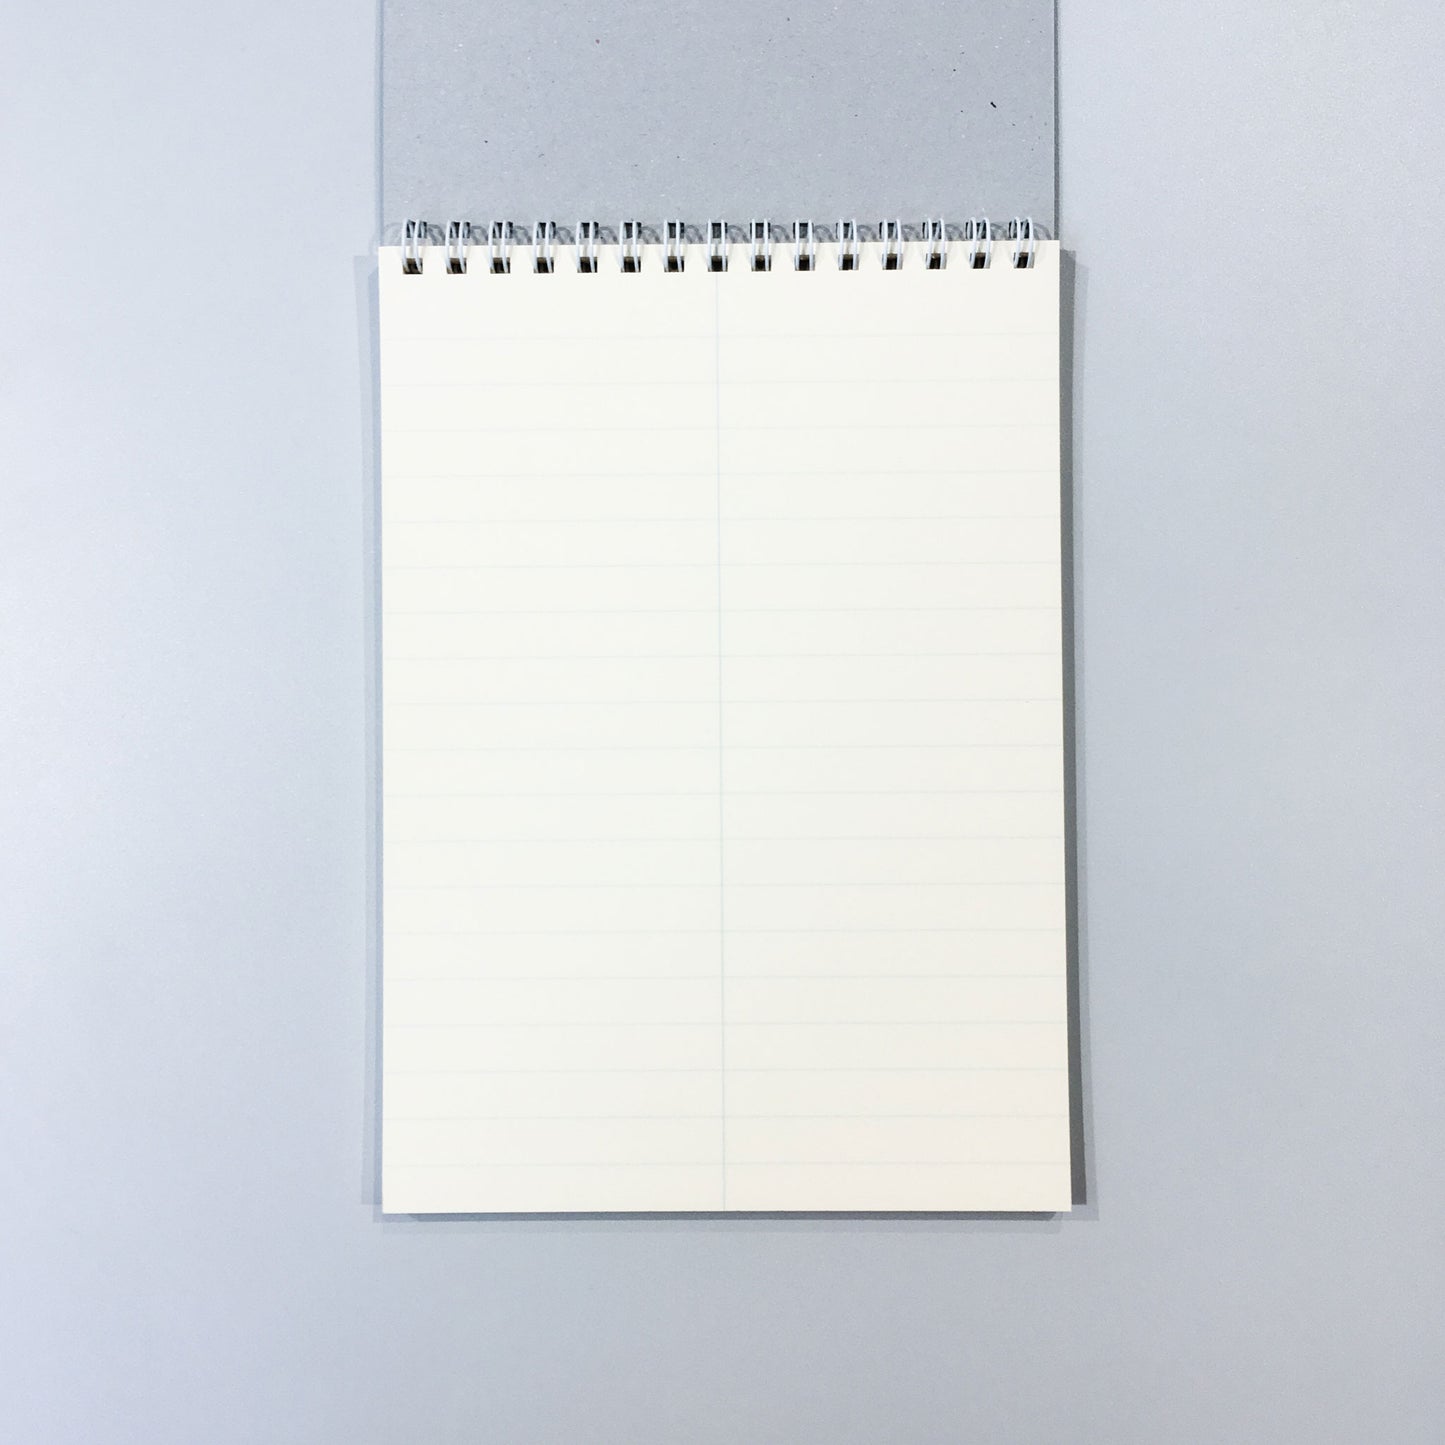 Stenographers' Notebook/ Gregg (LIFE)